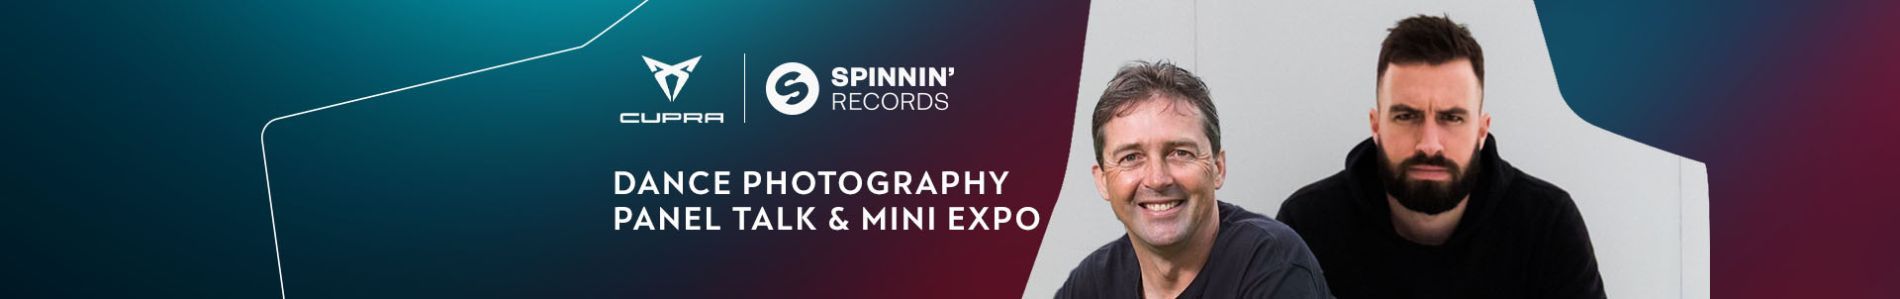 Spinnin' Sessions CUPRA x SPINNIN' RECORDS | DANCE PHOTOGRAPHY PANEL TALK & MINI EXPO